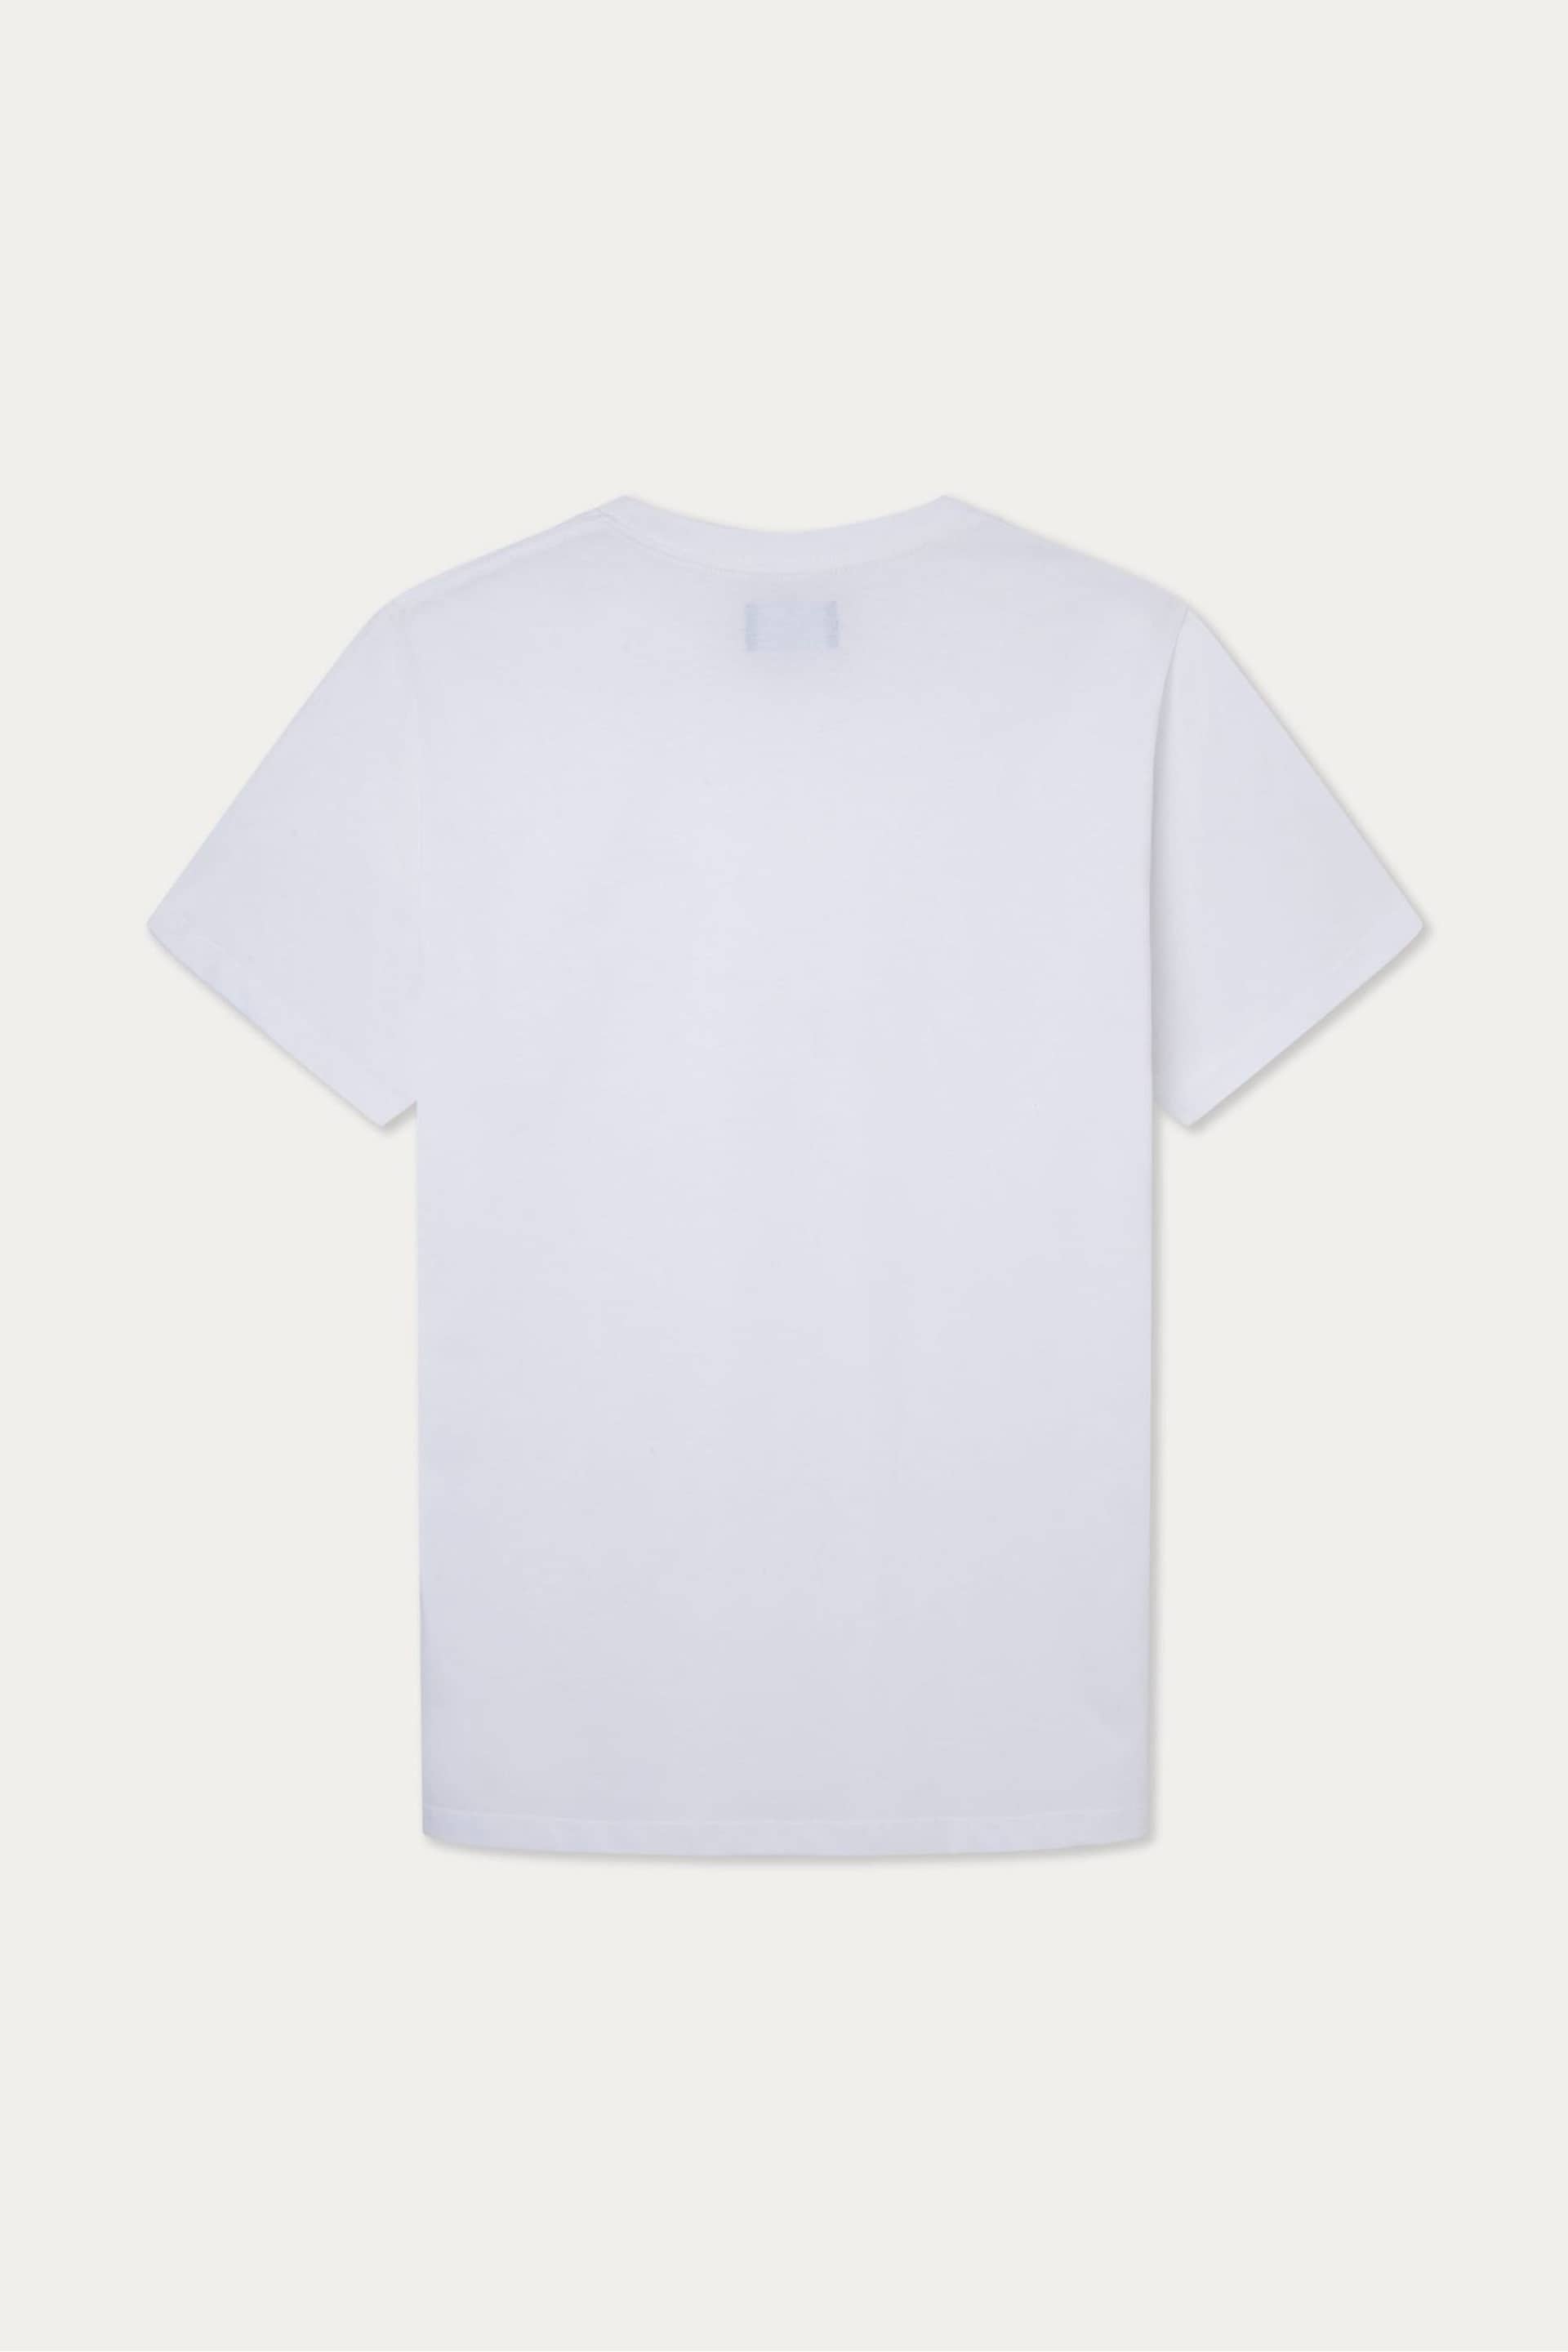 Hackett London Men White T-Shirt - Image 2 of 3